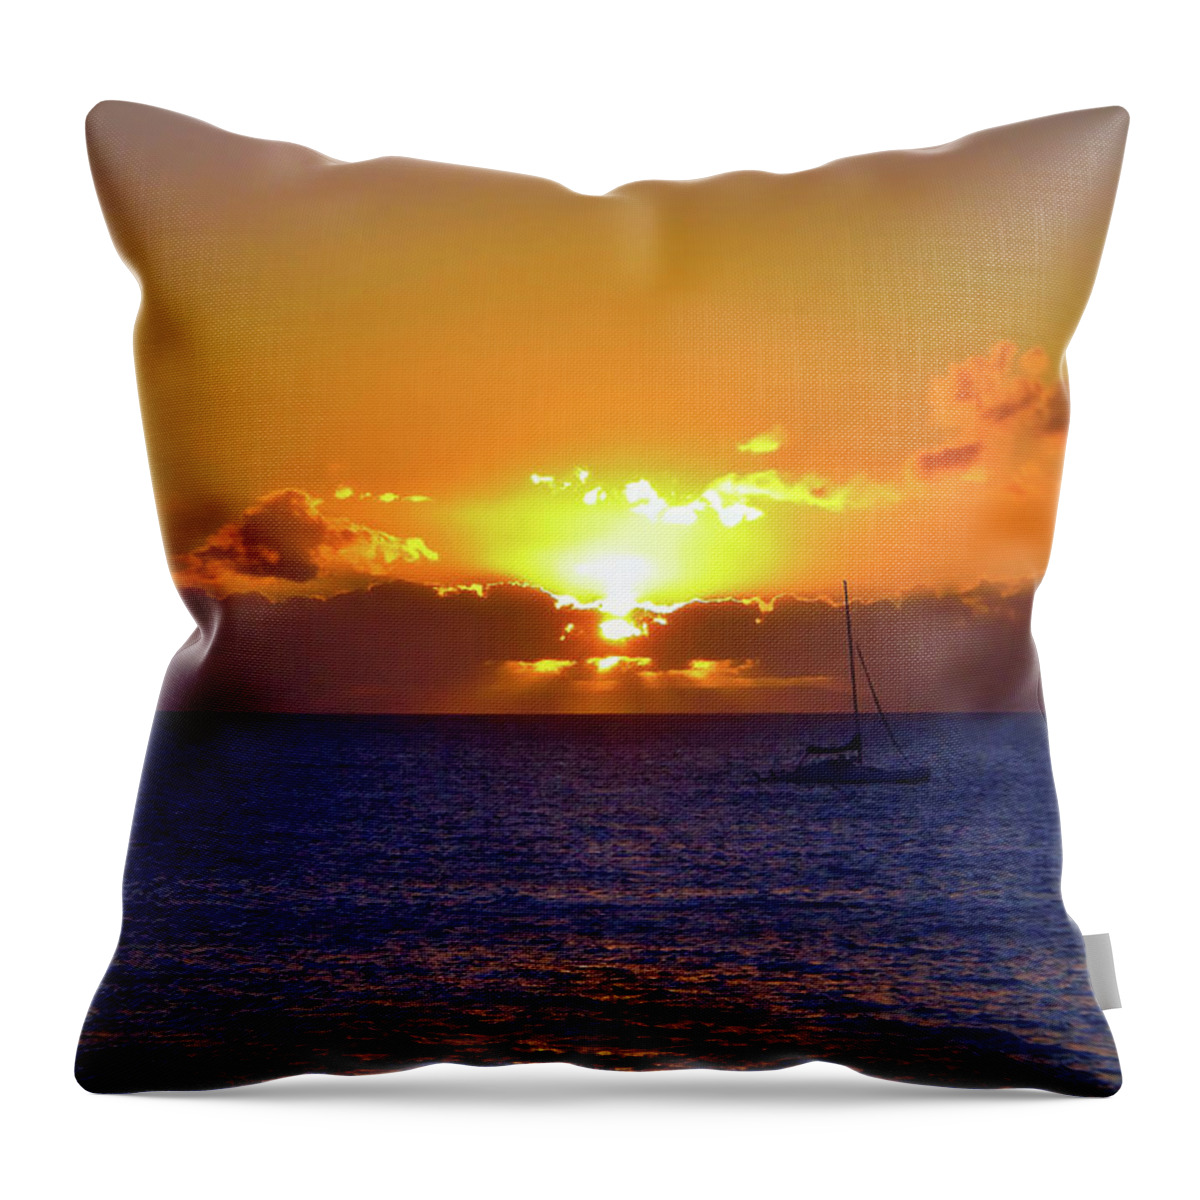 Maui Hawaii Throw Pillow featuring the photograph Maui Sailboat Sunset by Marilyn MacCrakin